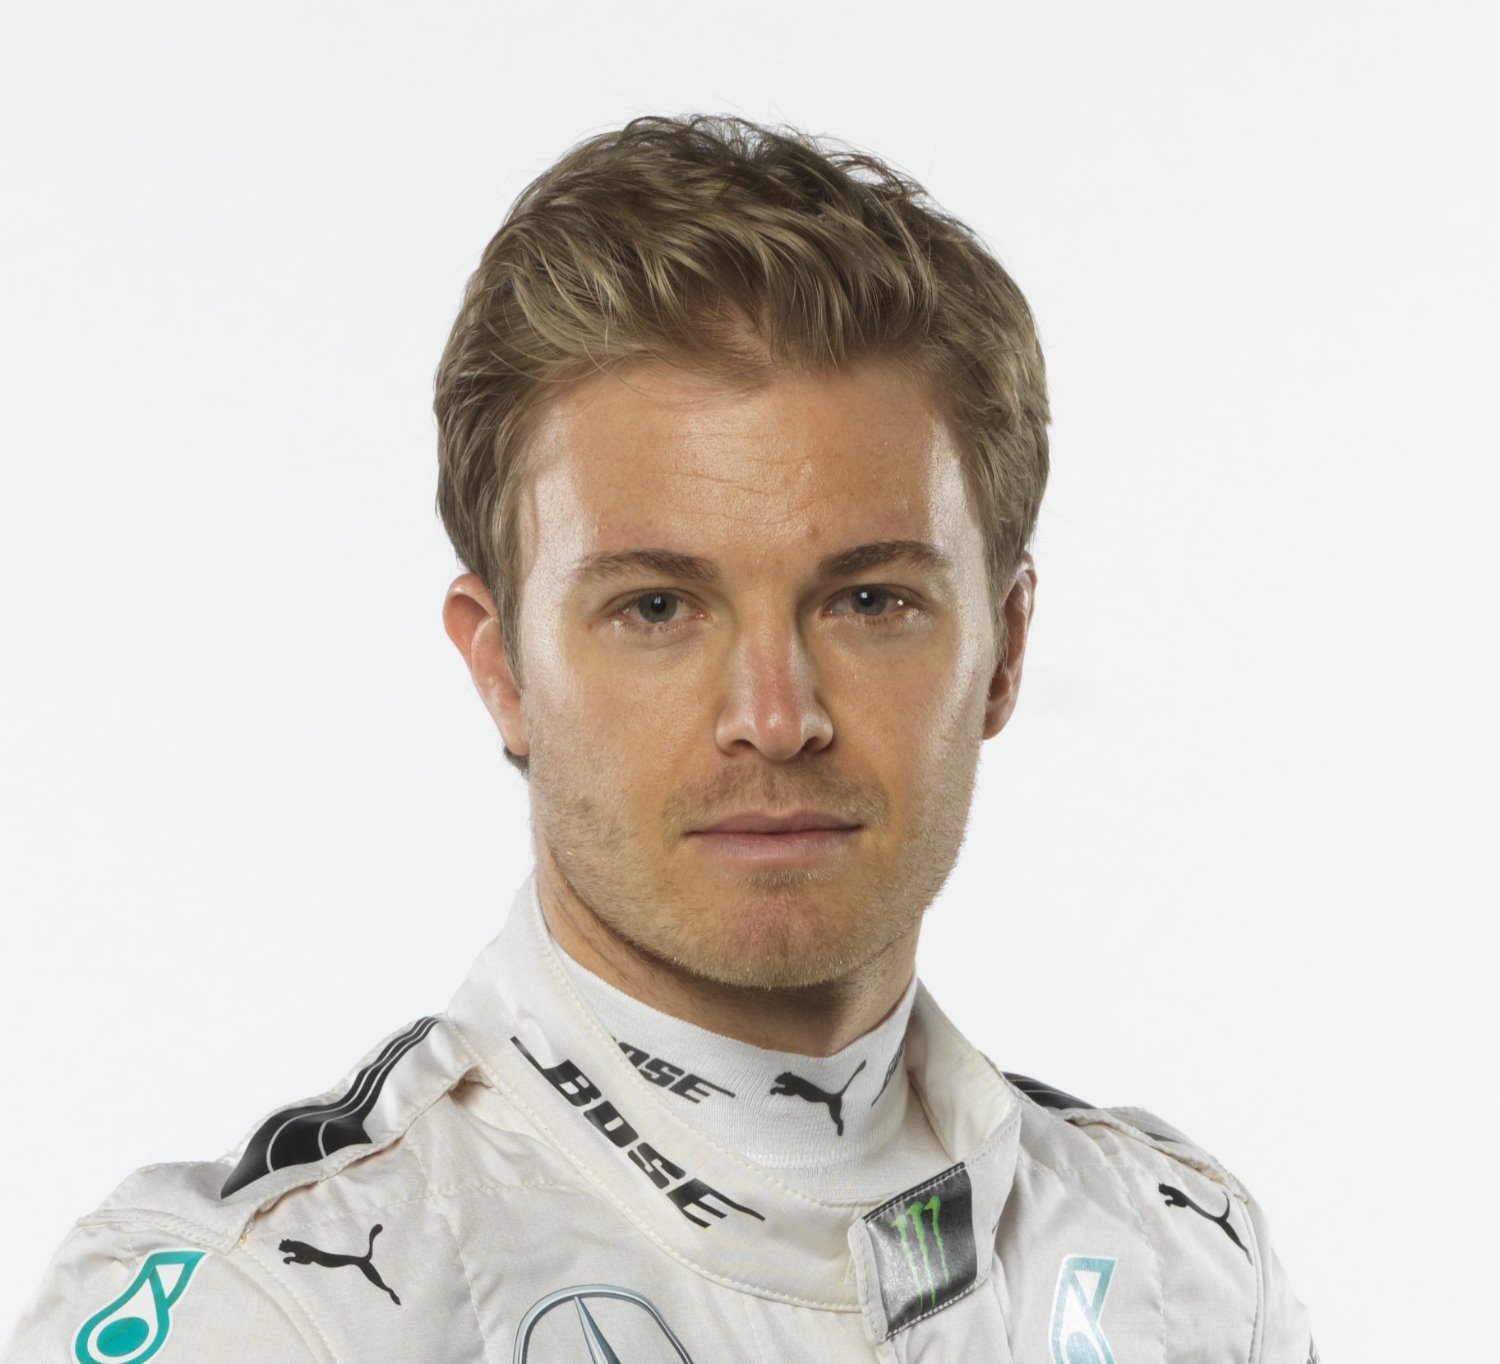 Nico Rosberg is 100% correct